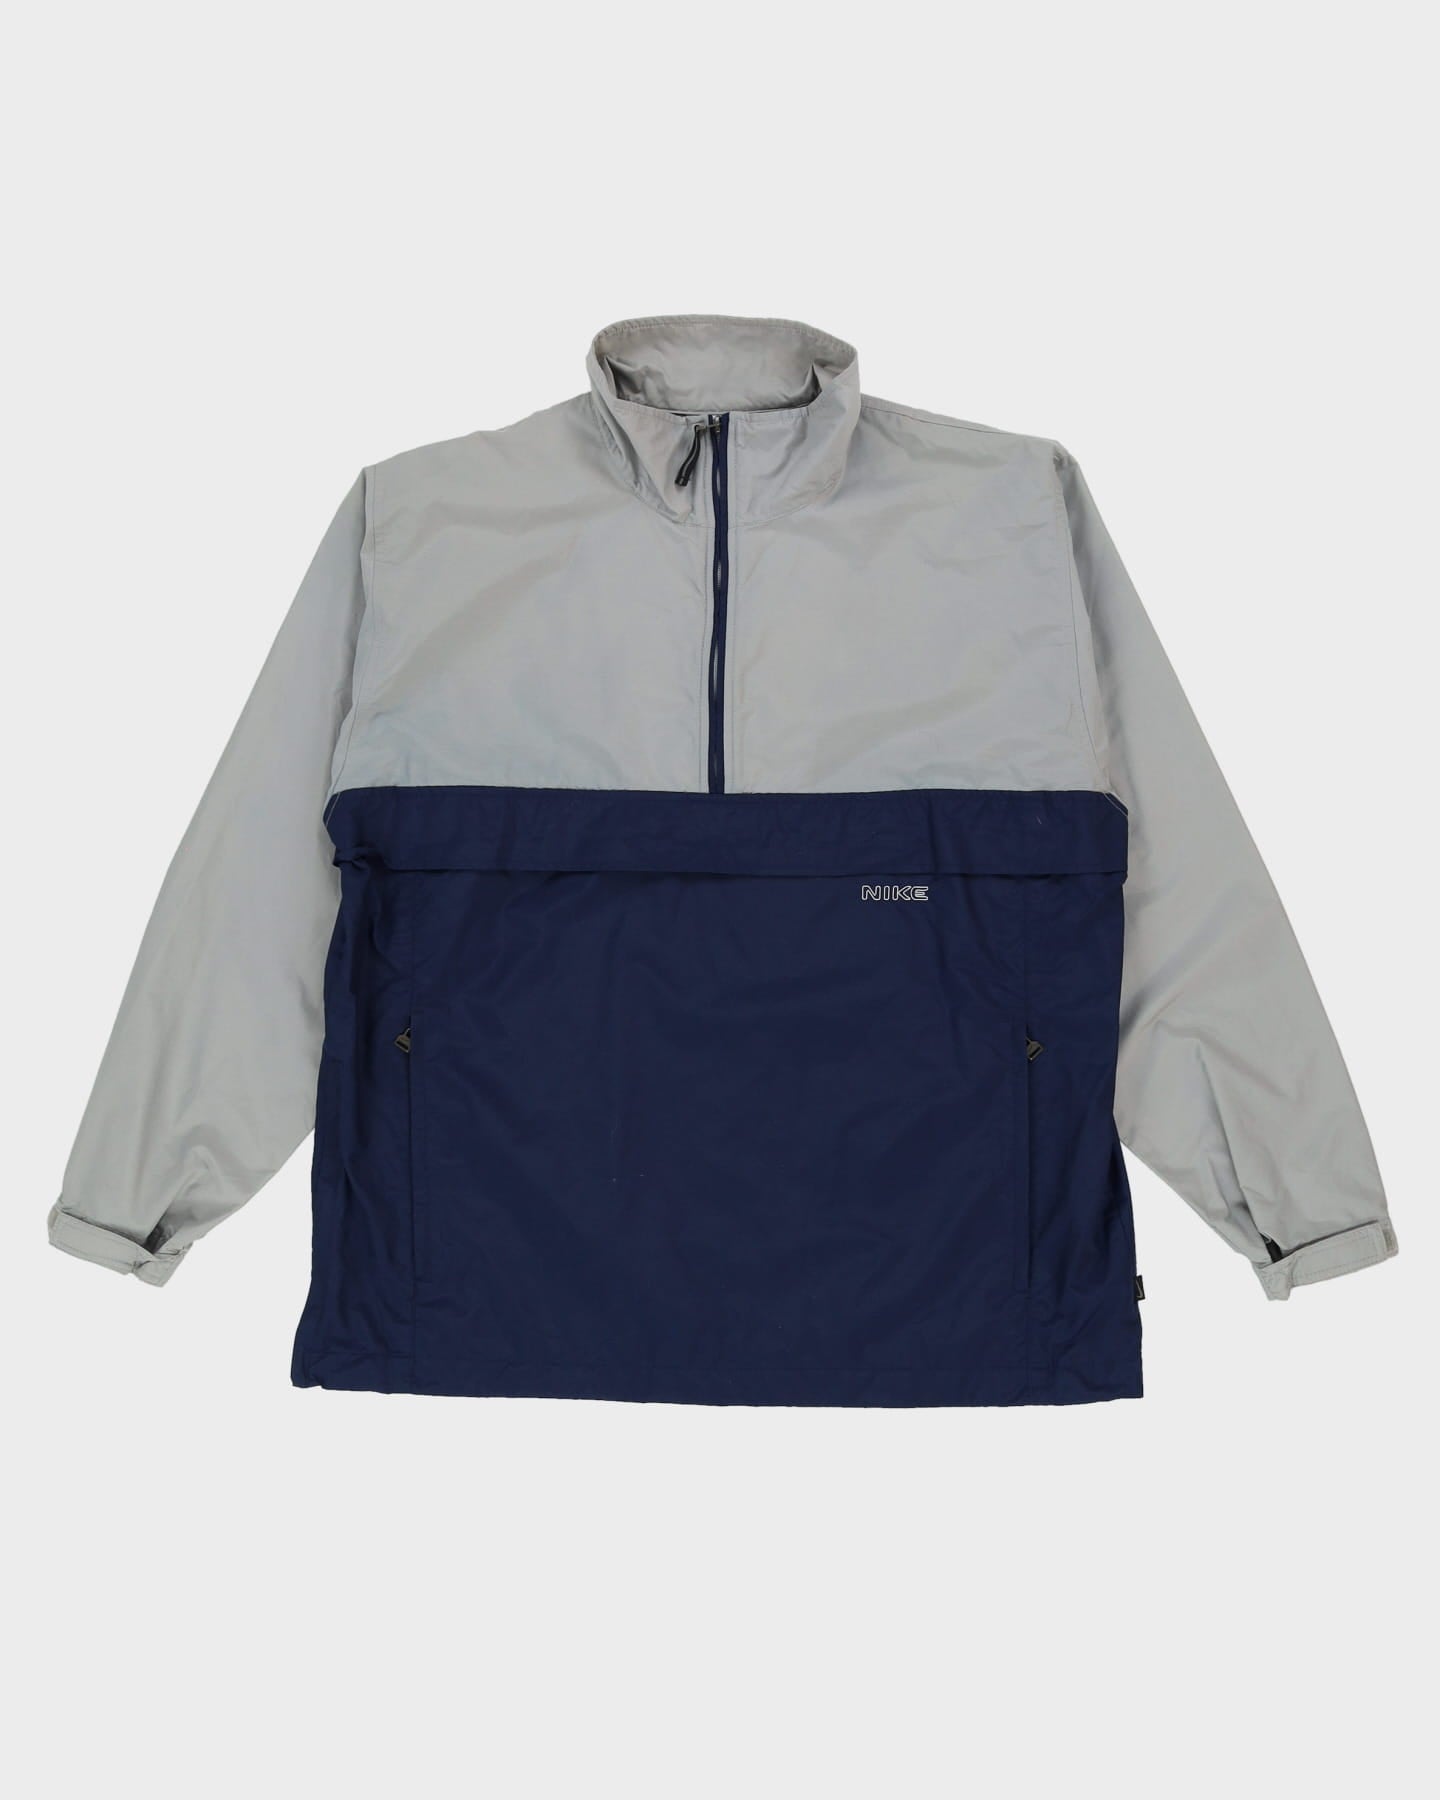 00s Nike Grey / Navy Half-Zip Windbreaker Jacket - L